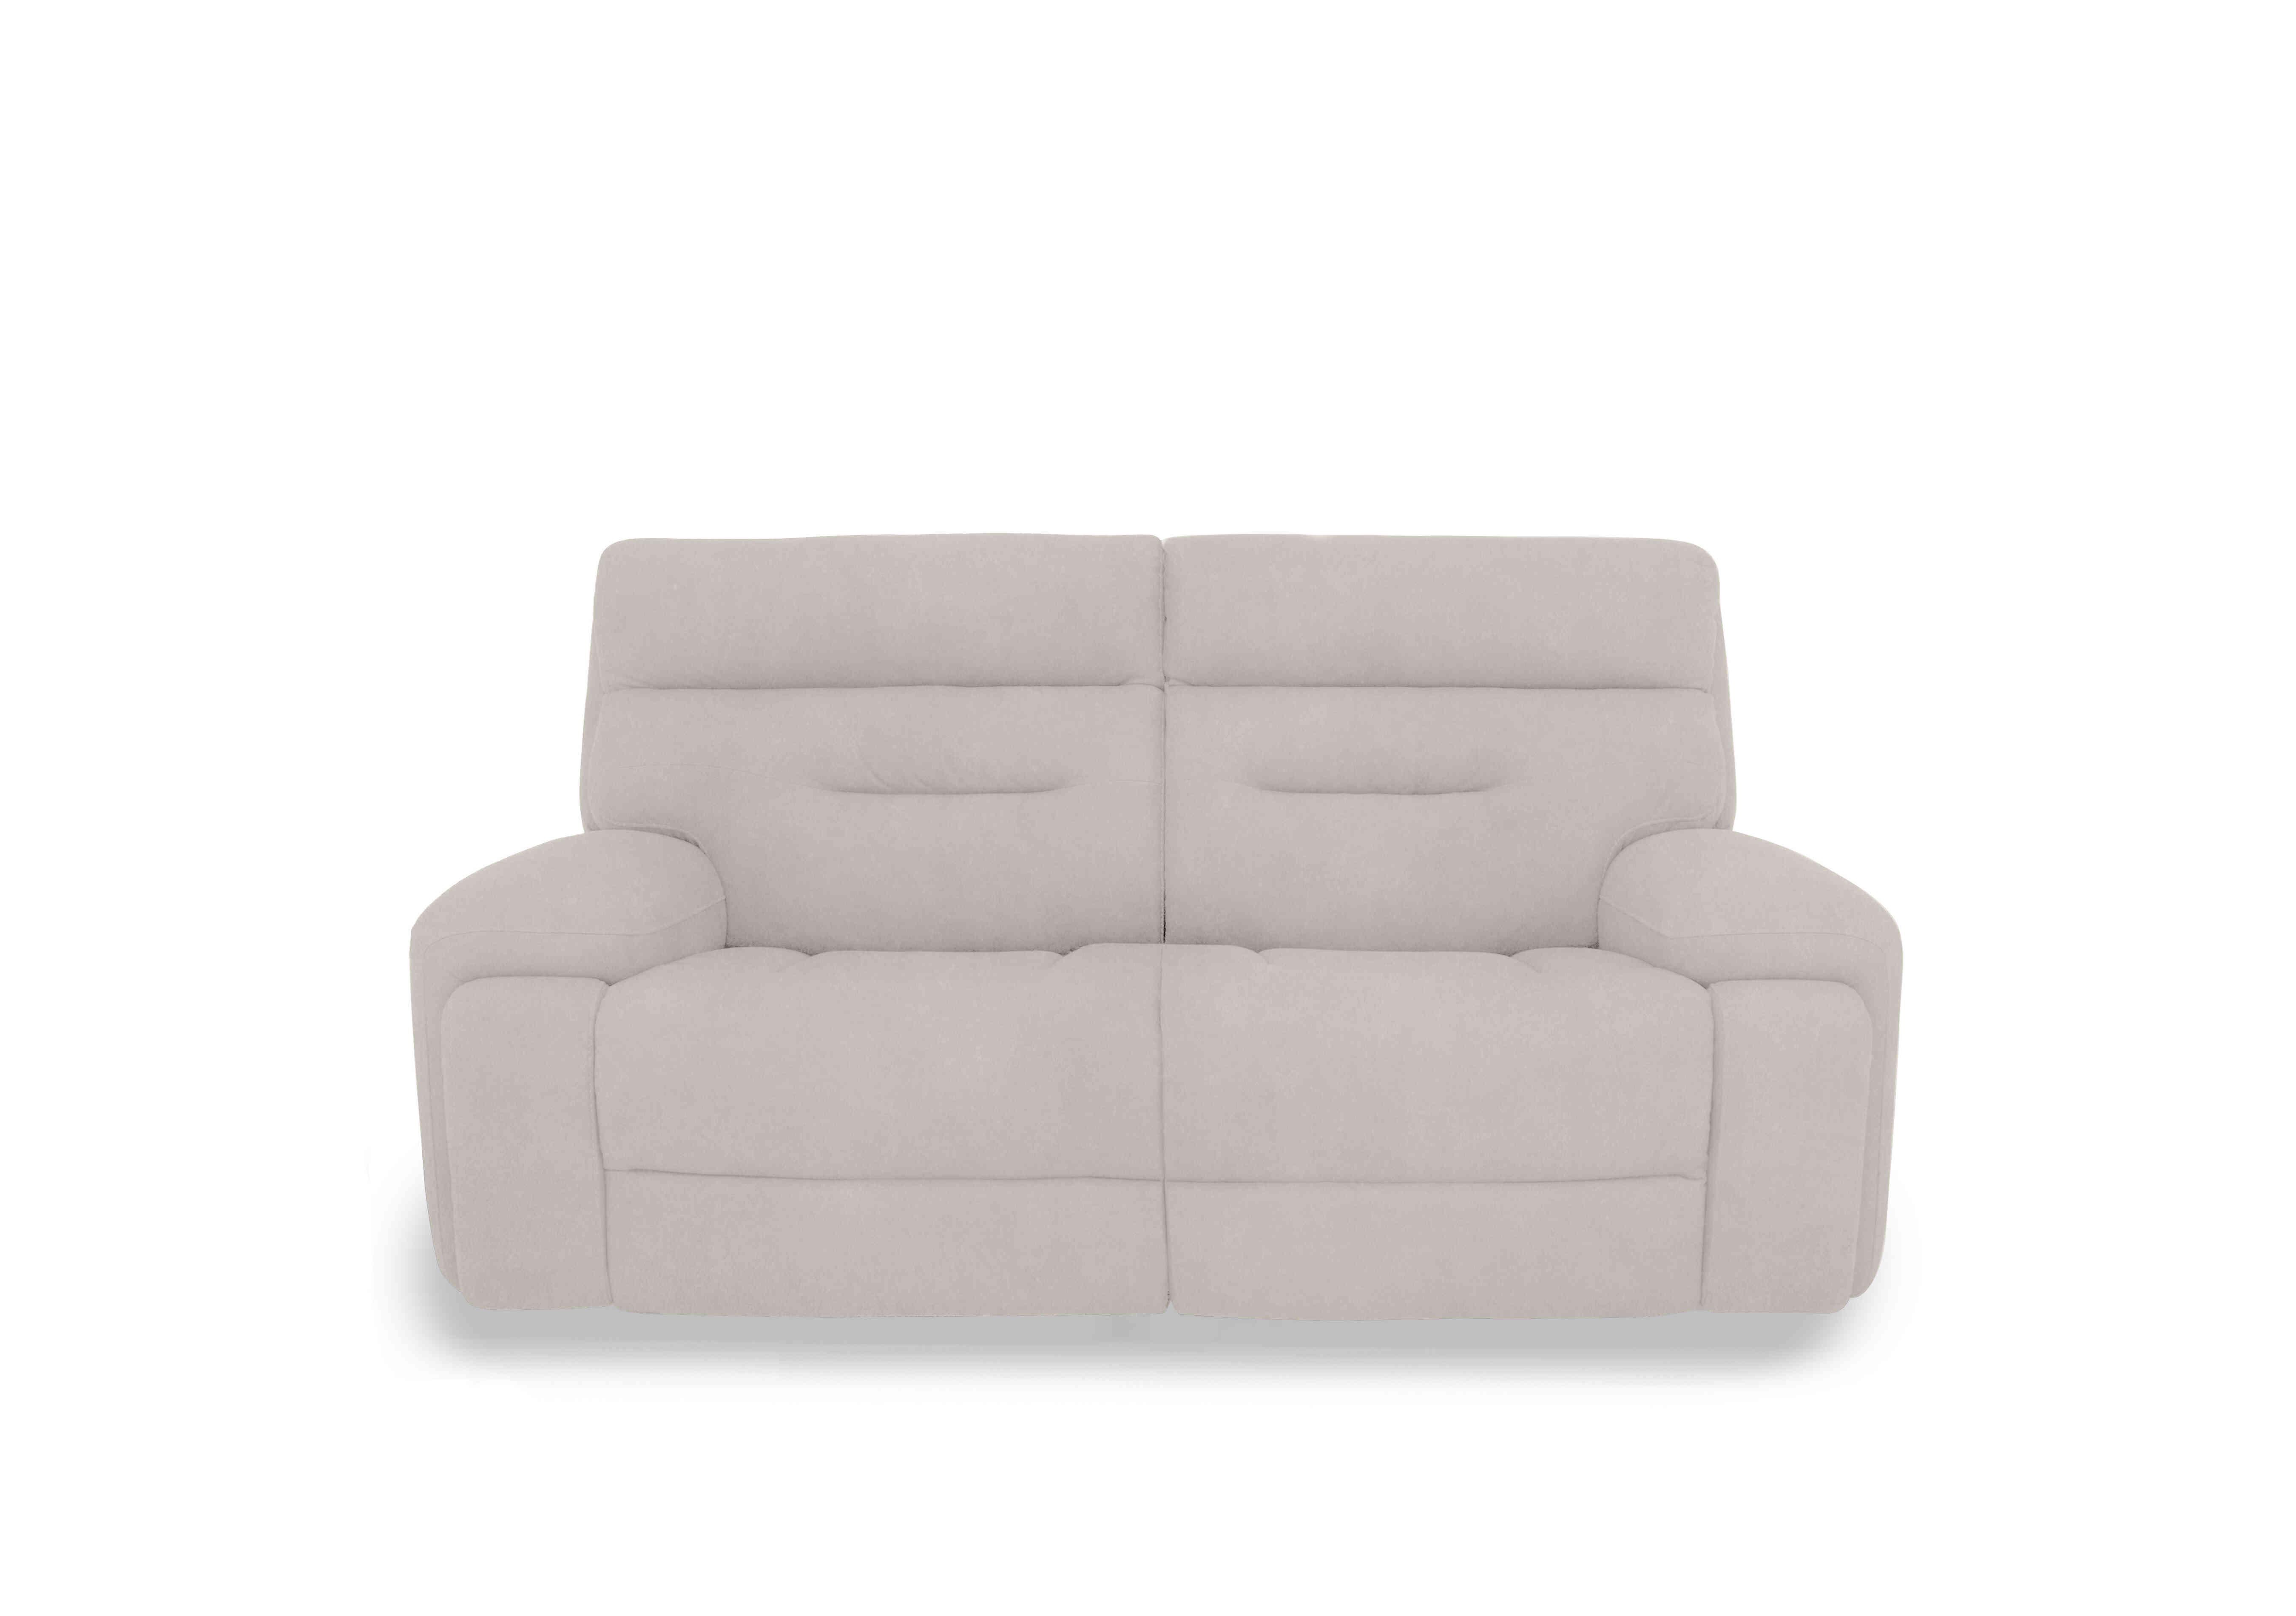 Cinemax 3 Seater Fabric Sofa in Vv-0307 Velvet White on Furniture Village